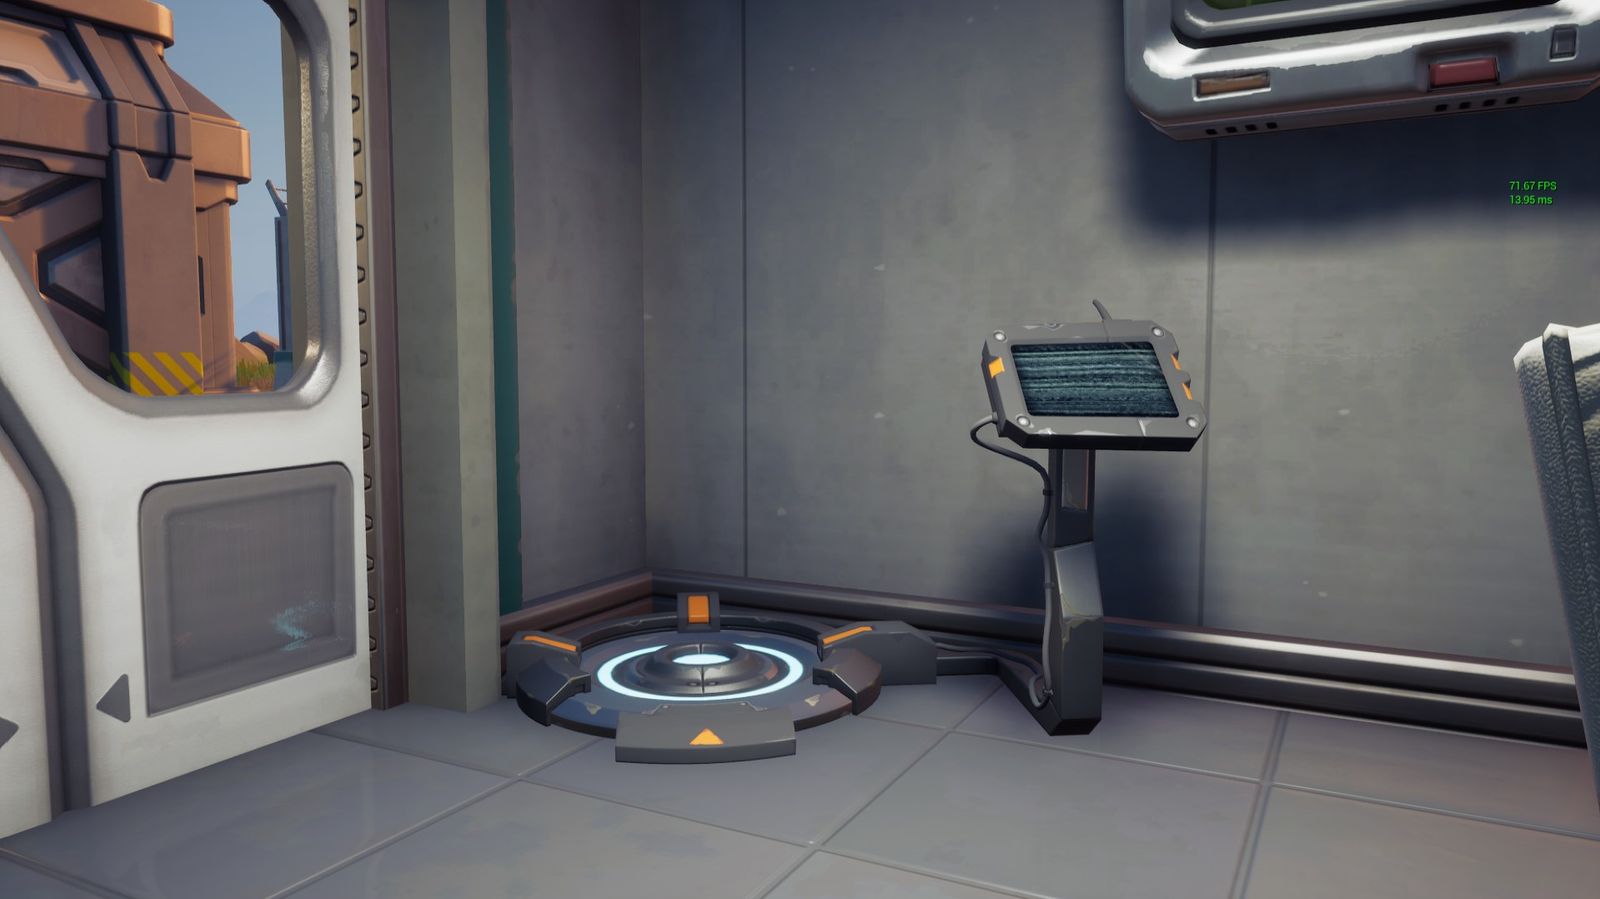 The body scanner in Fortnite. Image via Epic Games